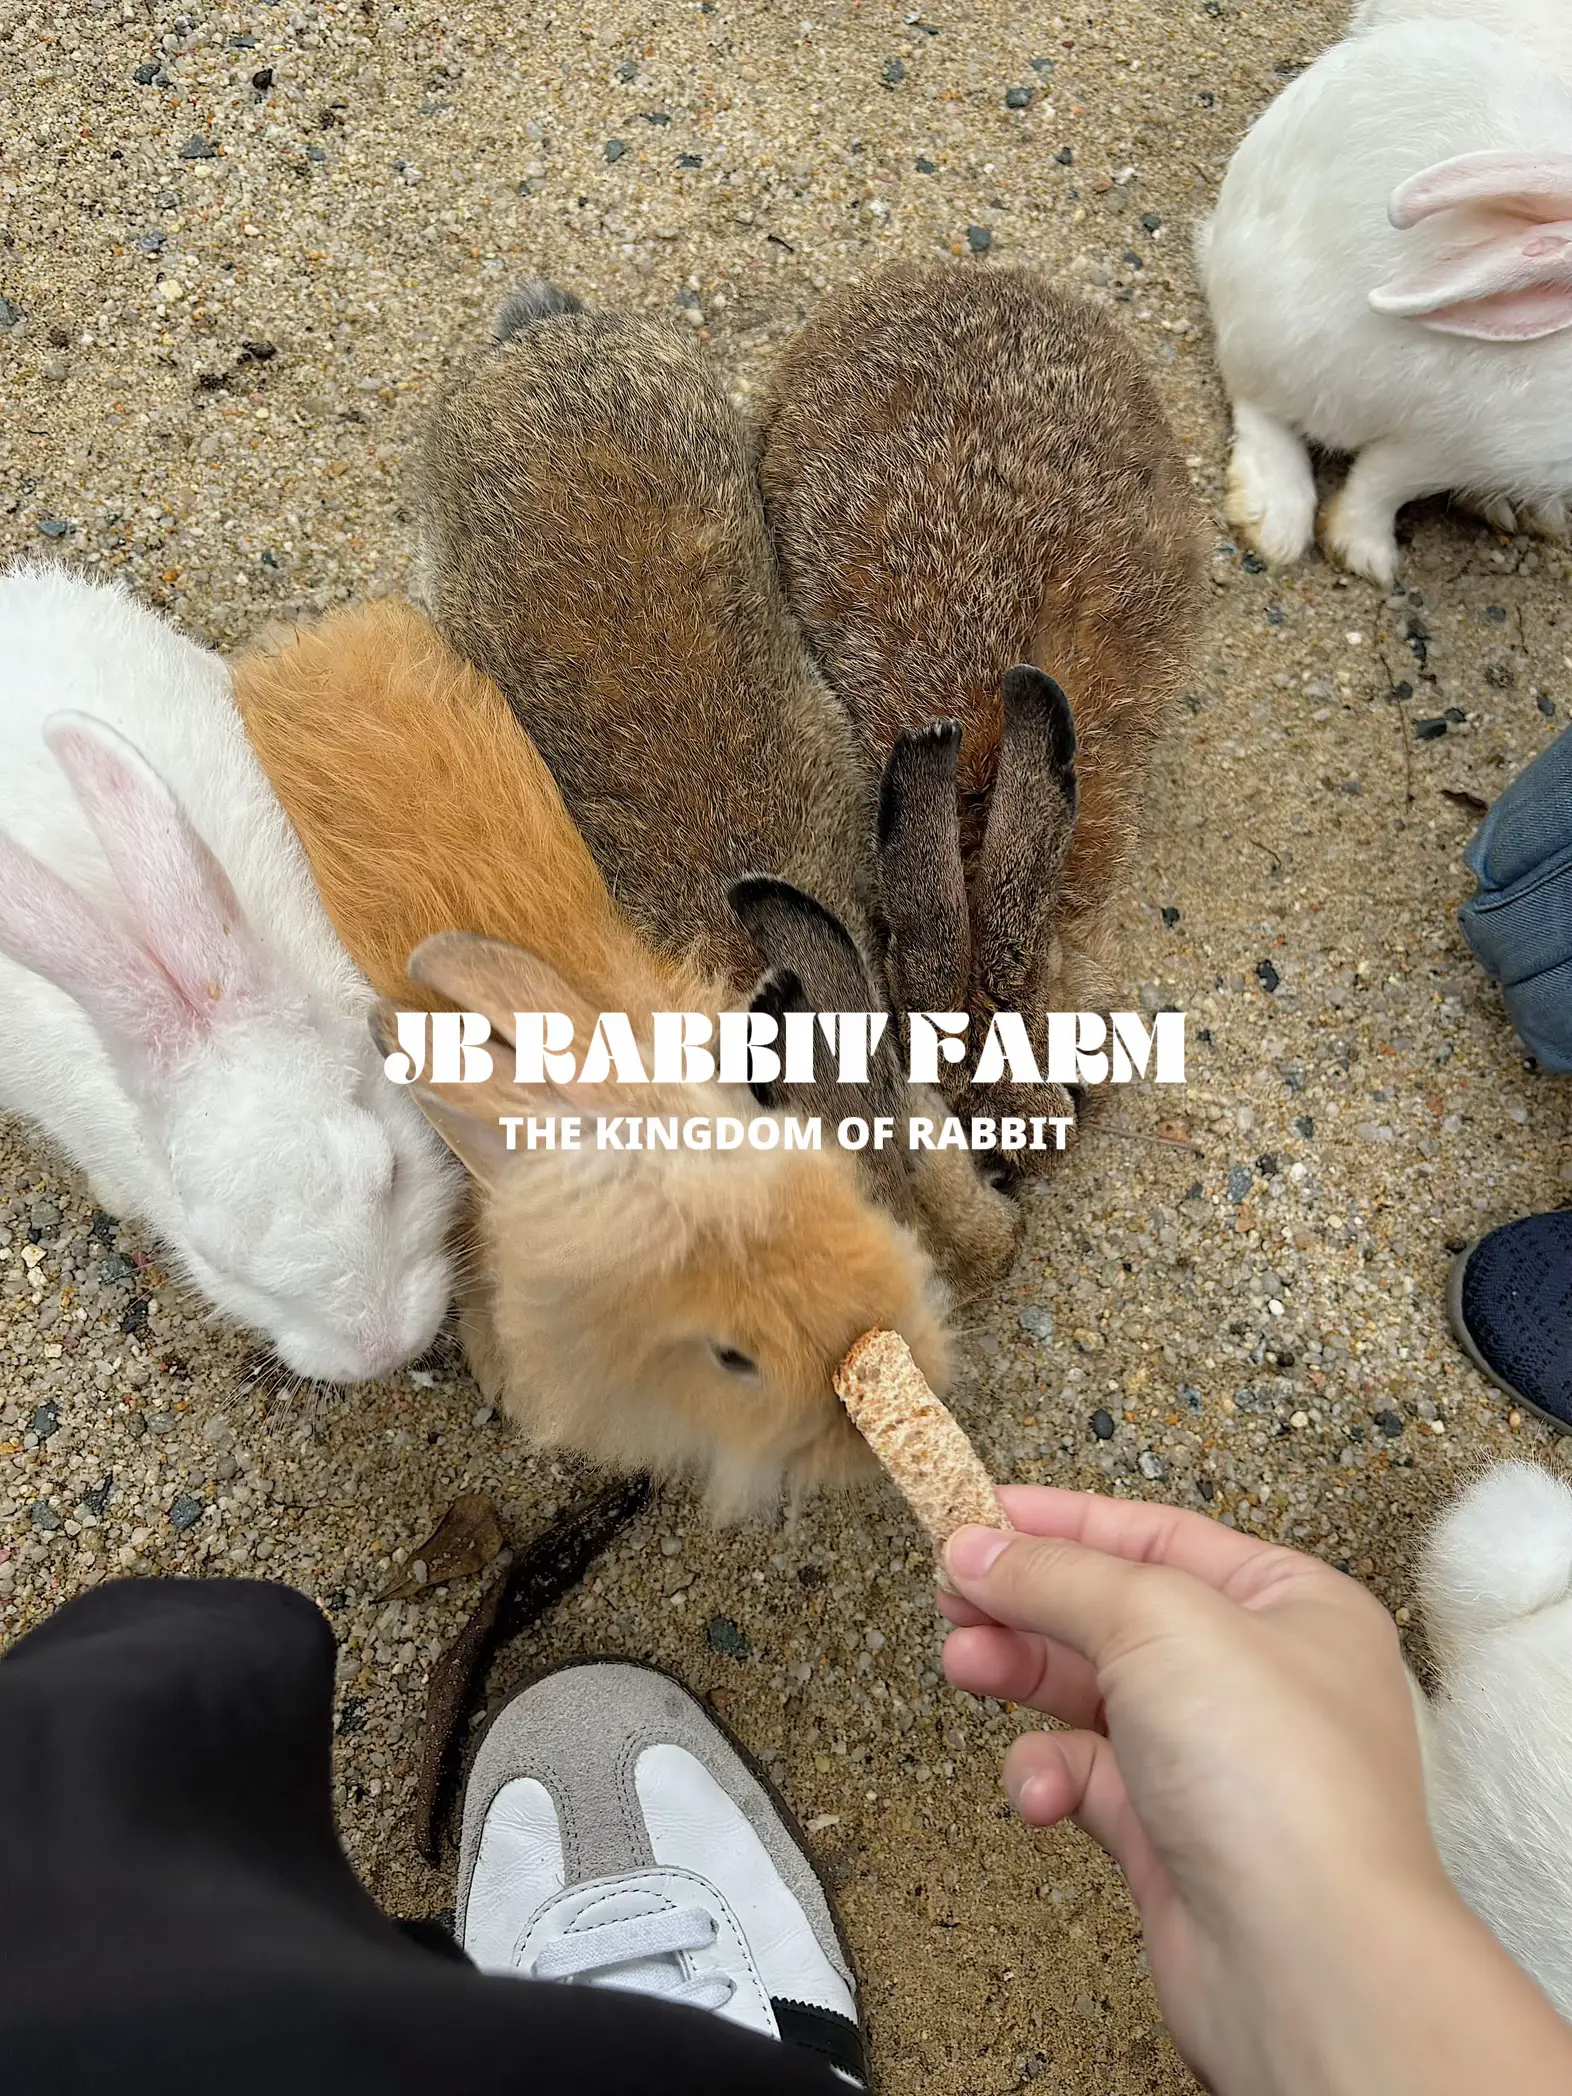 visit this rabbit farm in jb („• ᴗ •„)'s images